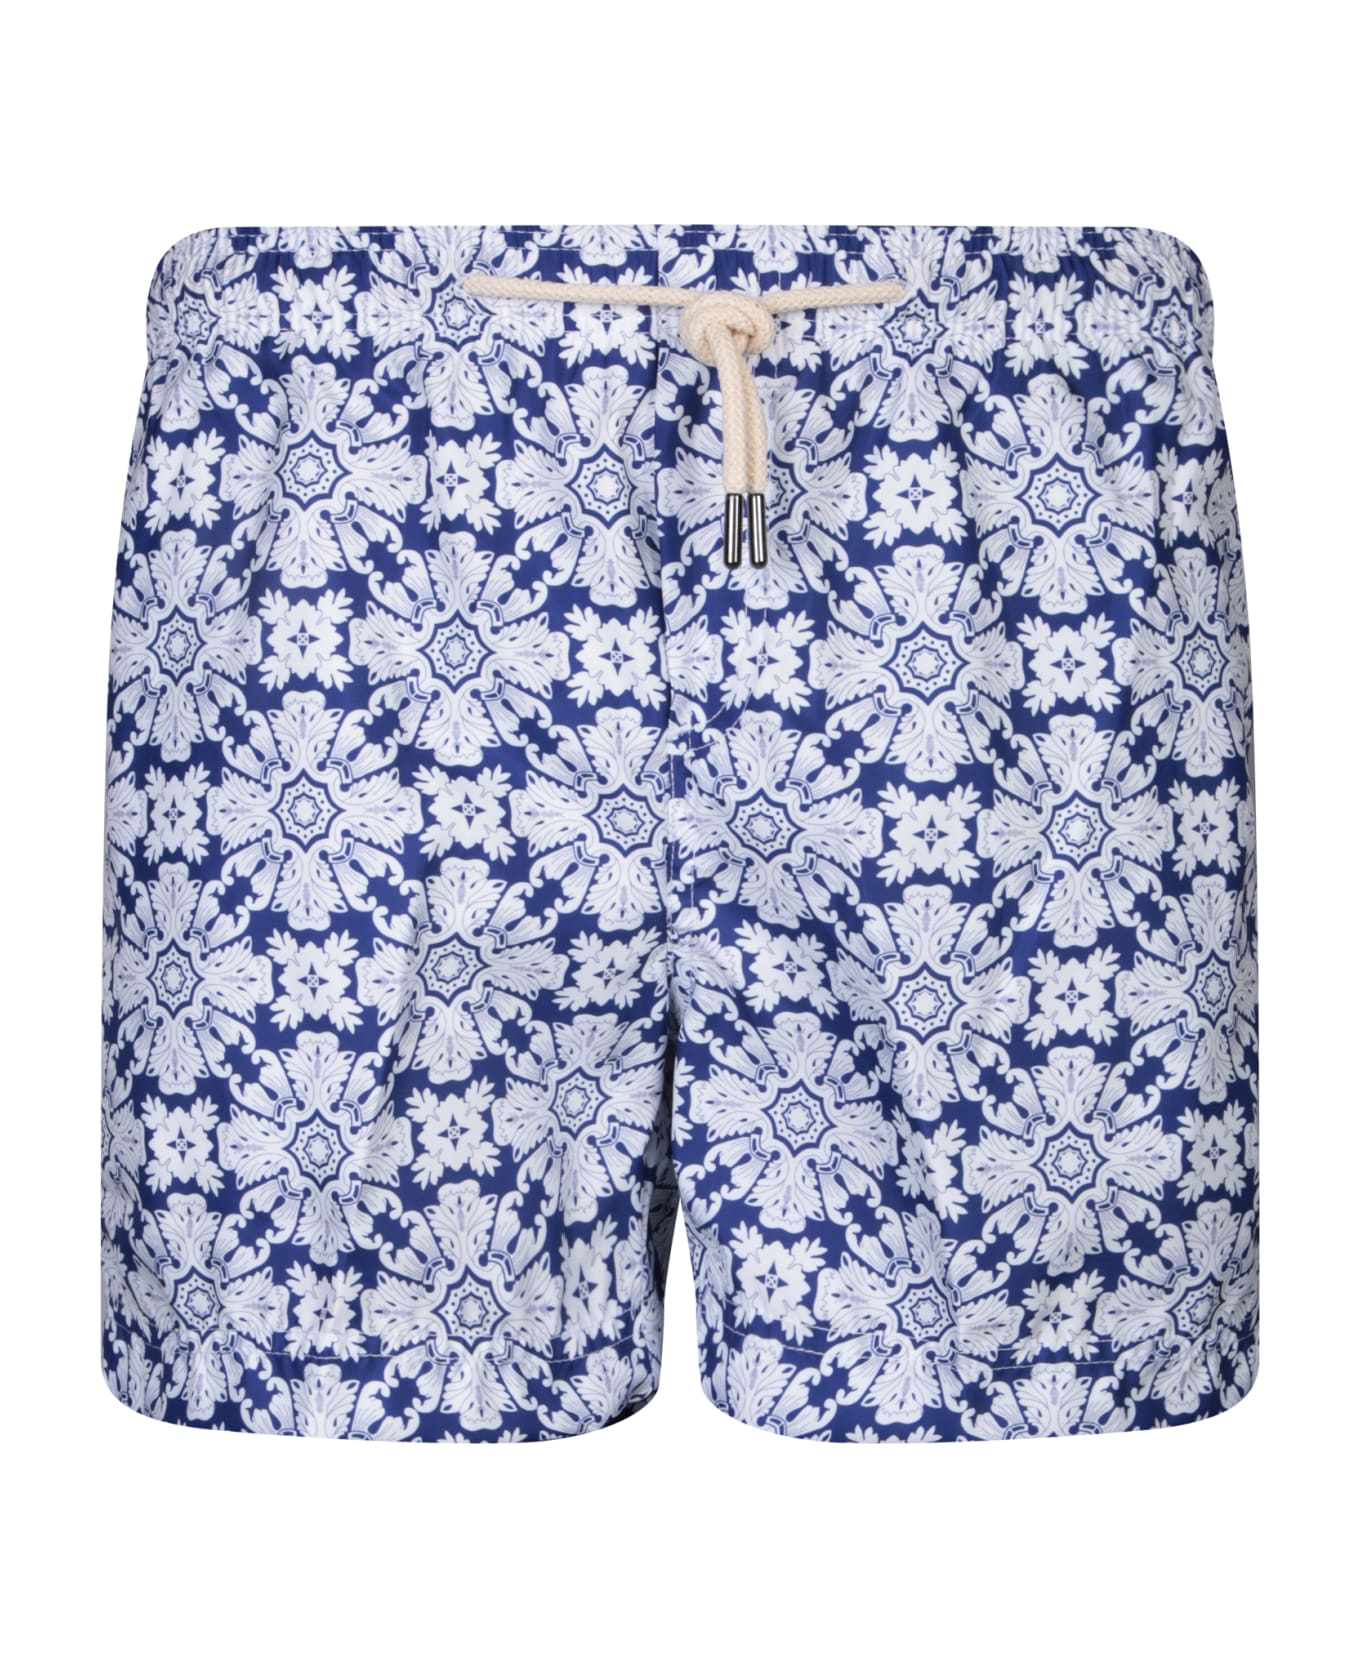 Peninsula Swimwear Floral Pattern Swim Shorts White/blue - Blue 水着